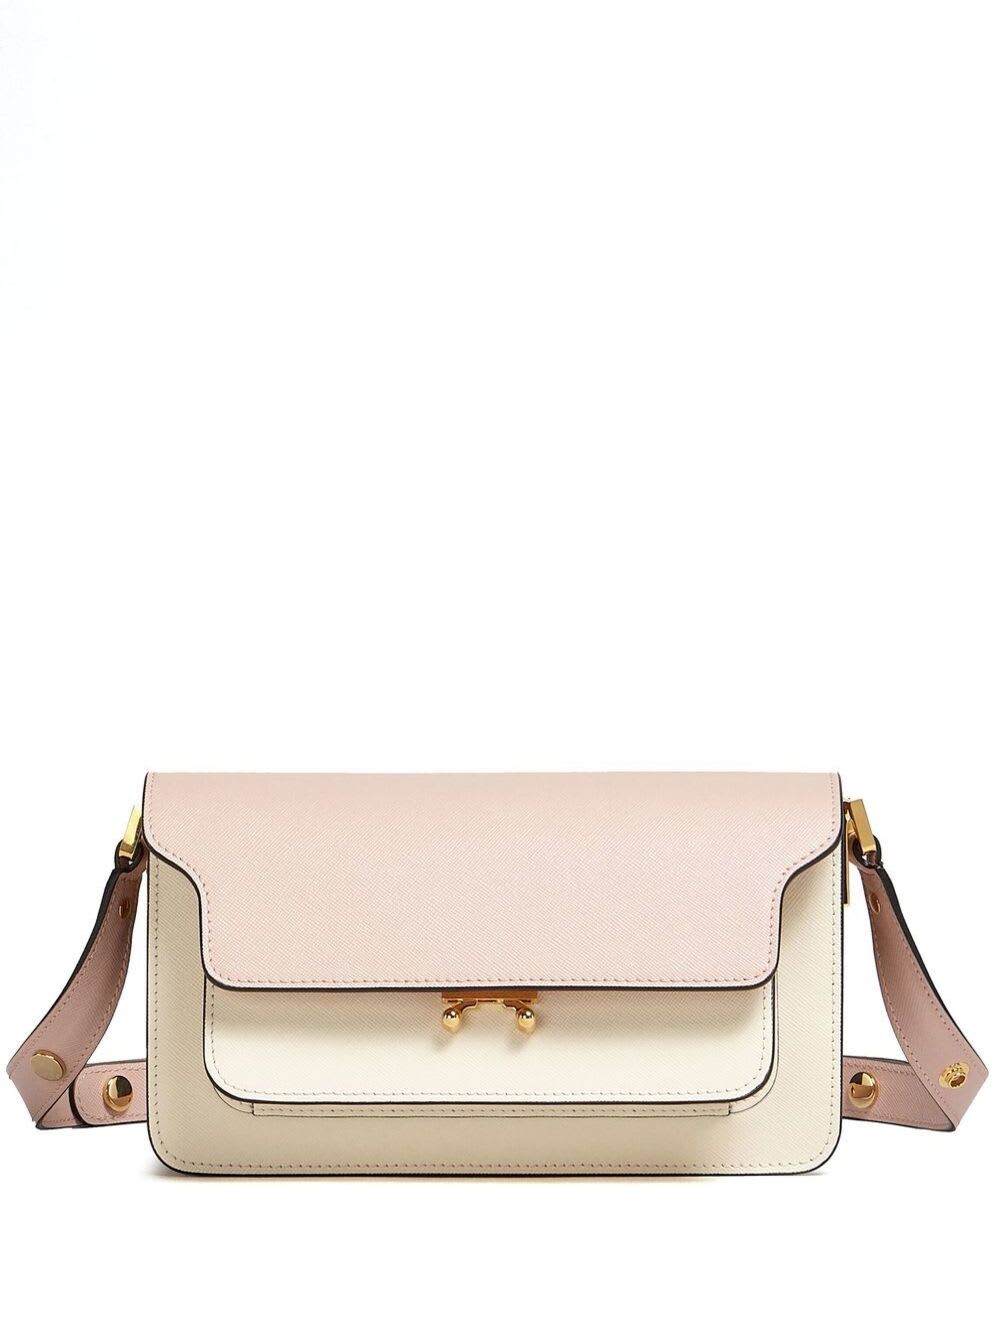 Marni White And Pink Trunk Bag Colourblock Design In Saffiano Leather Woman